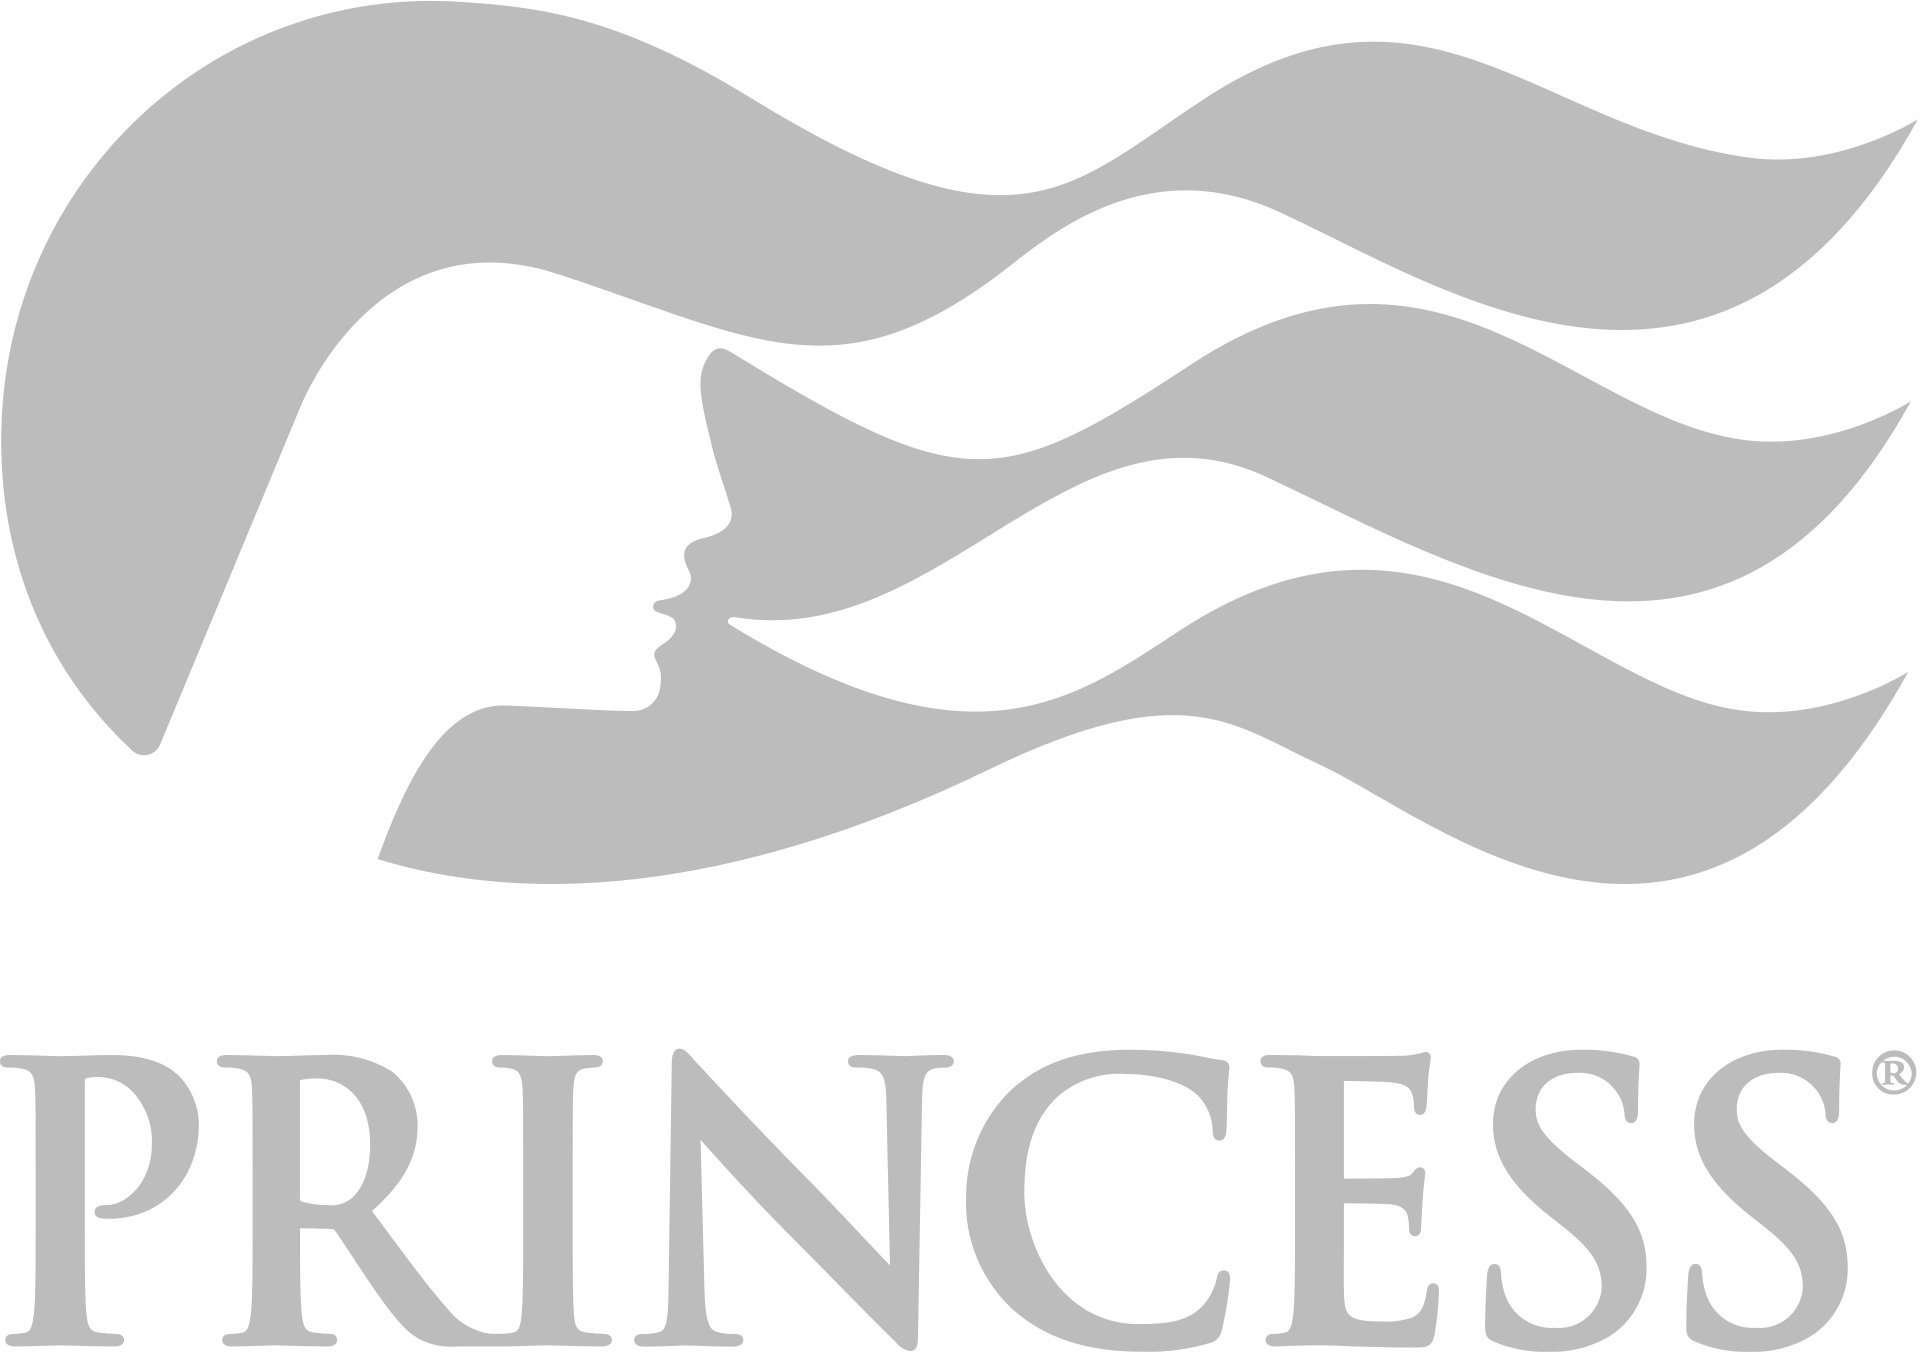 Princess_Cruises_logo+gray.jpg